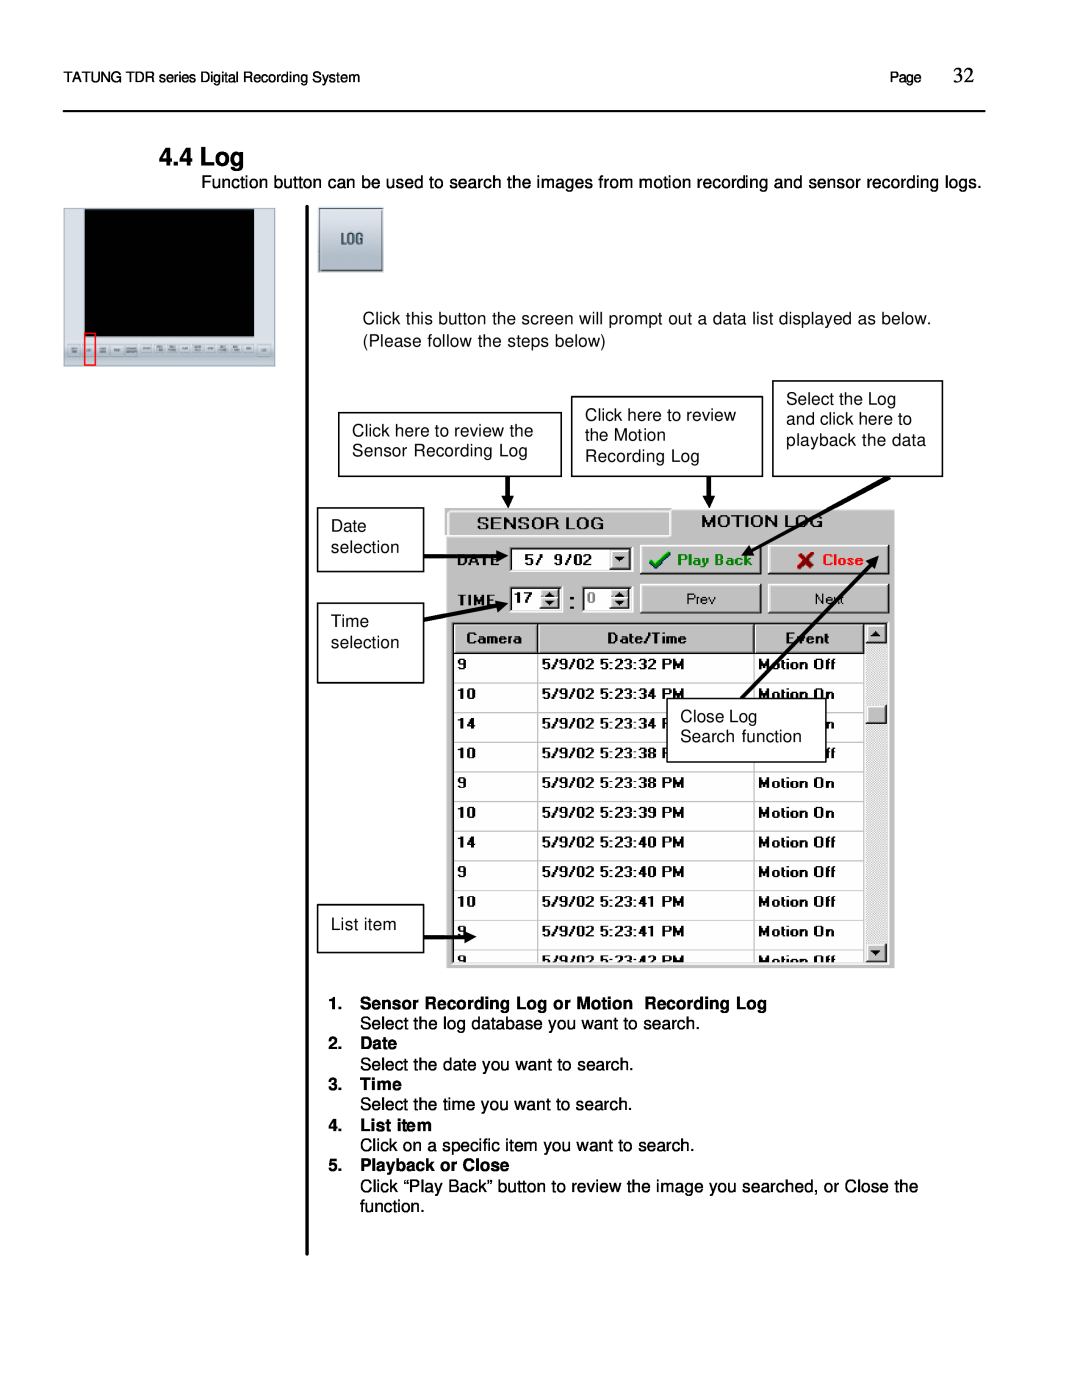 Tatung TDR-22XX operation manual 4.4 Log, Date, Time, List item, Playback or Close 